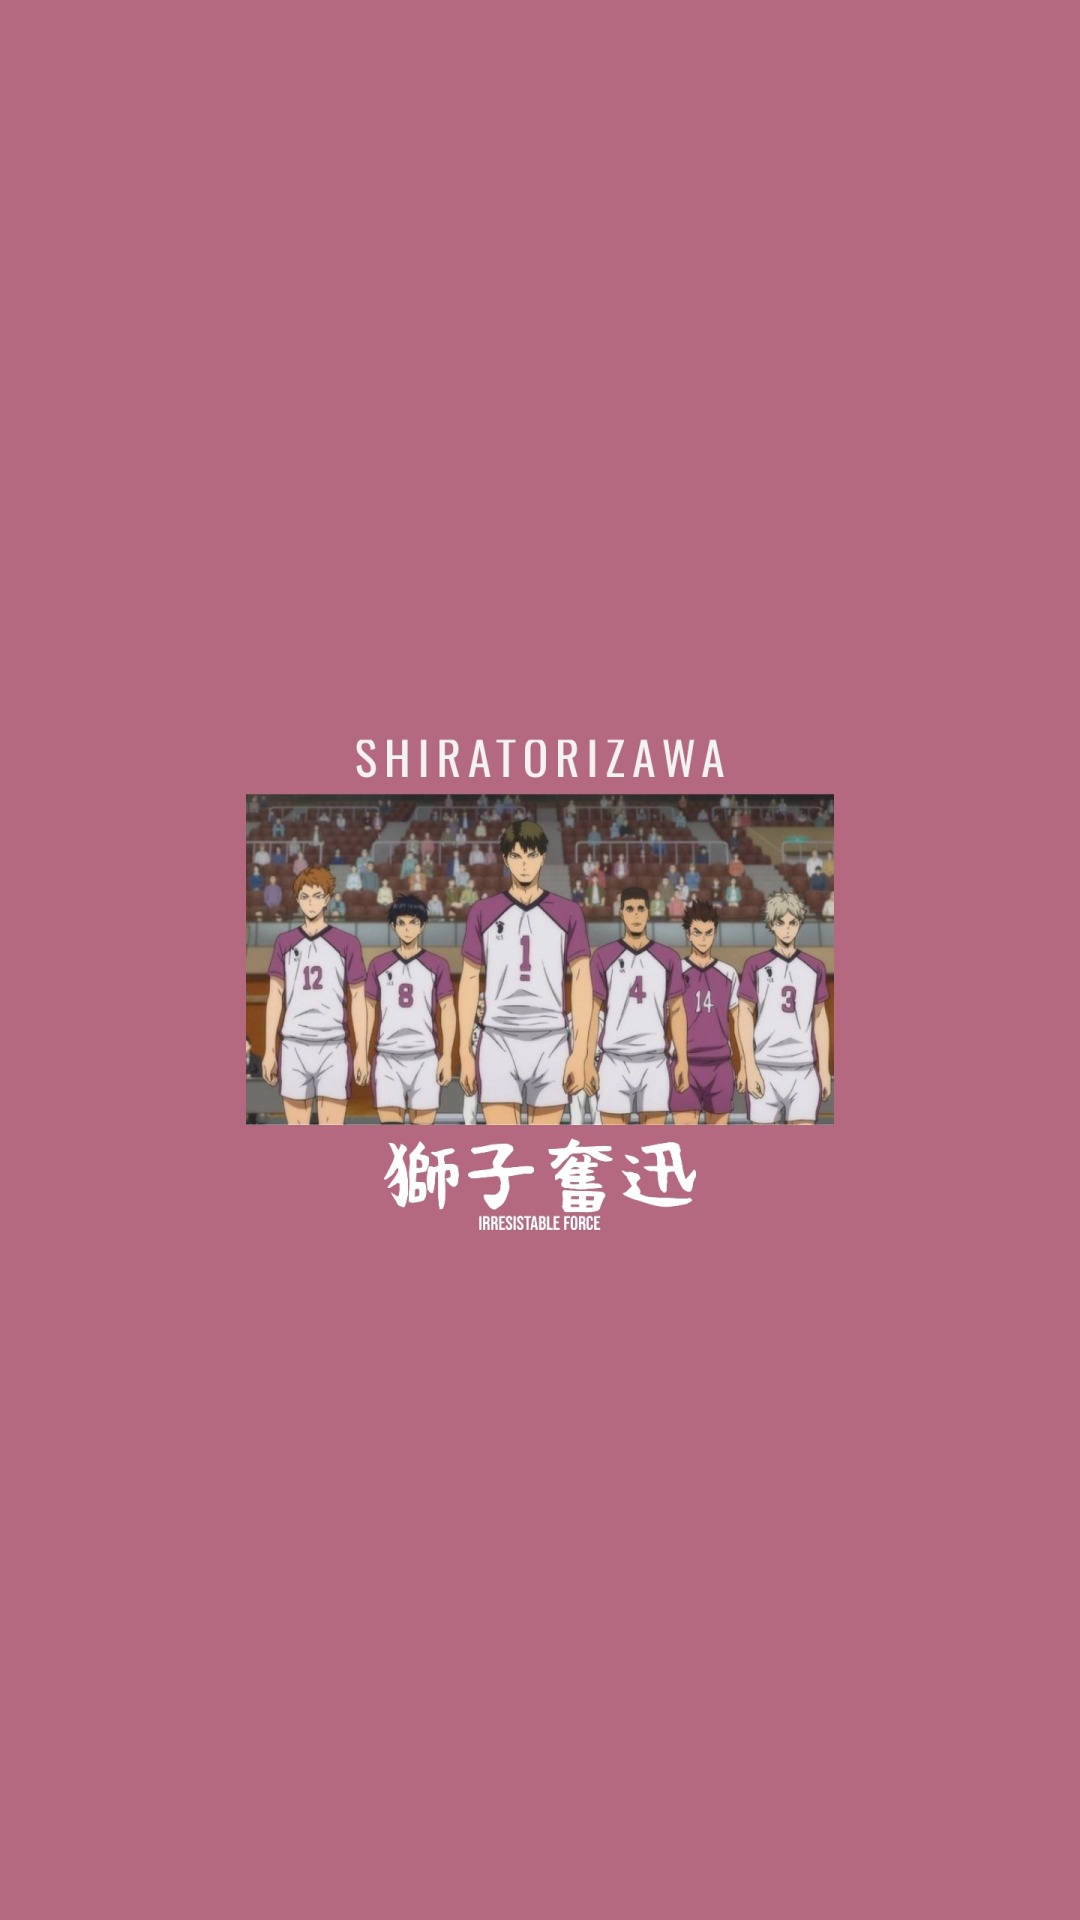 Irresistible Shiratorizawa Team Wallpaper